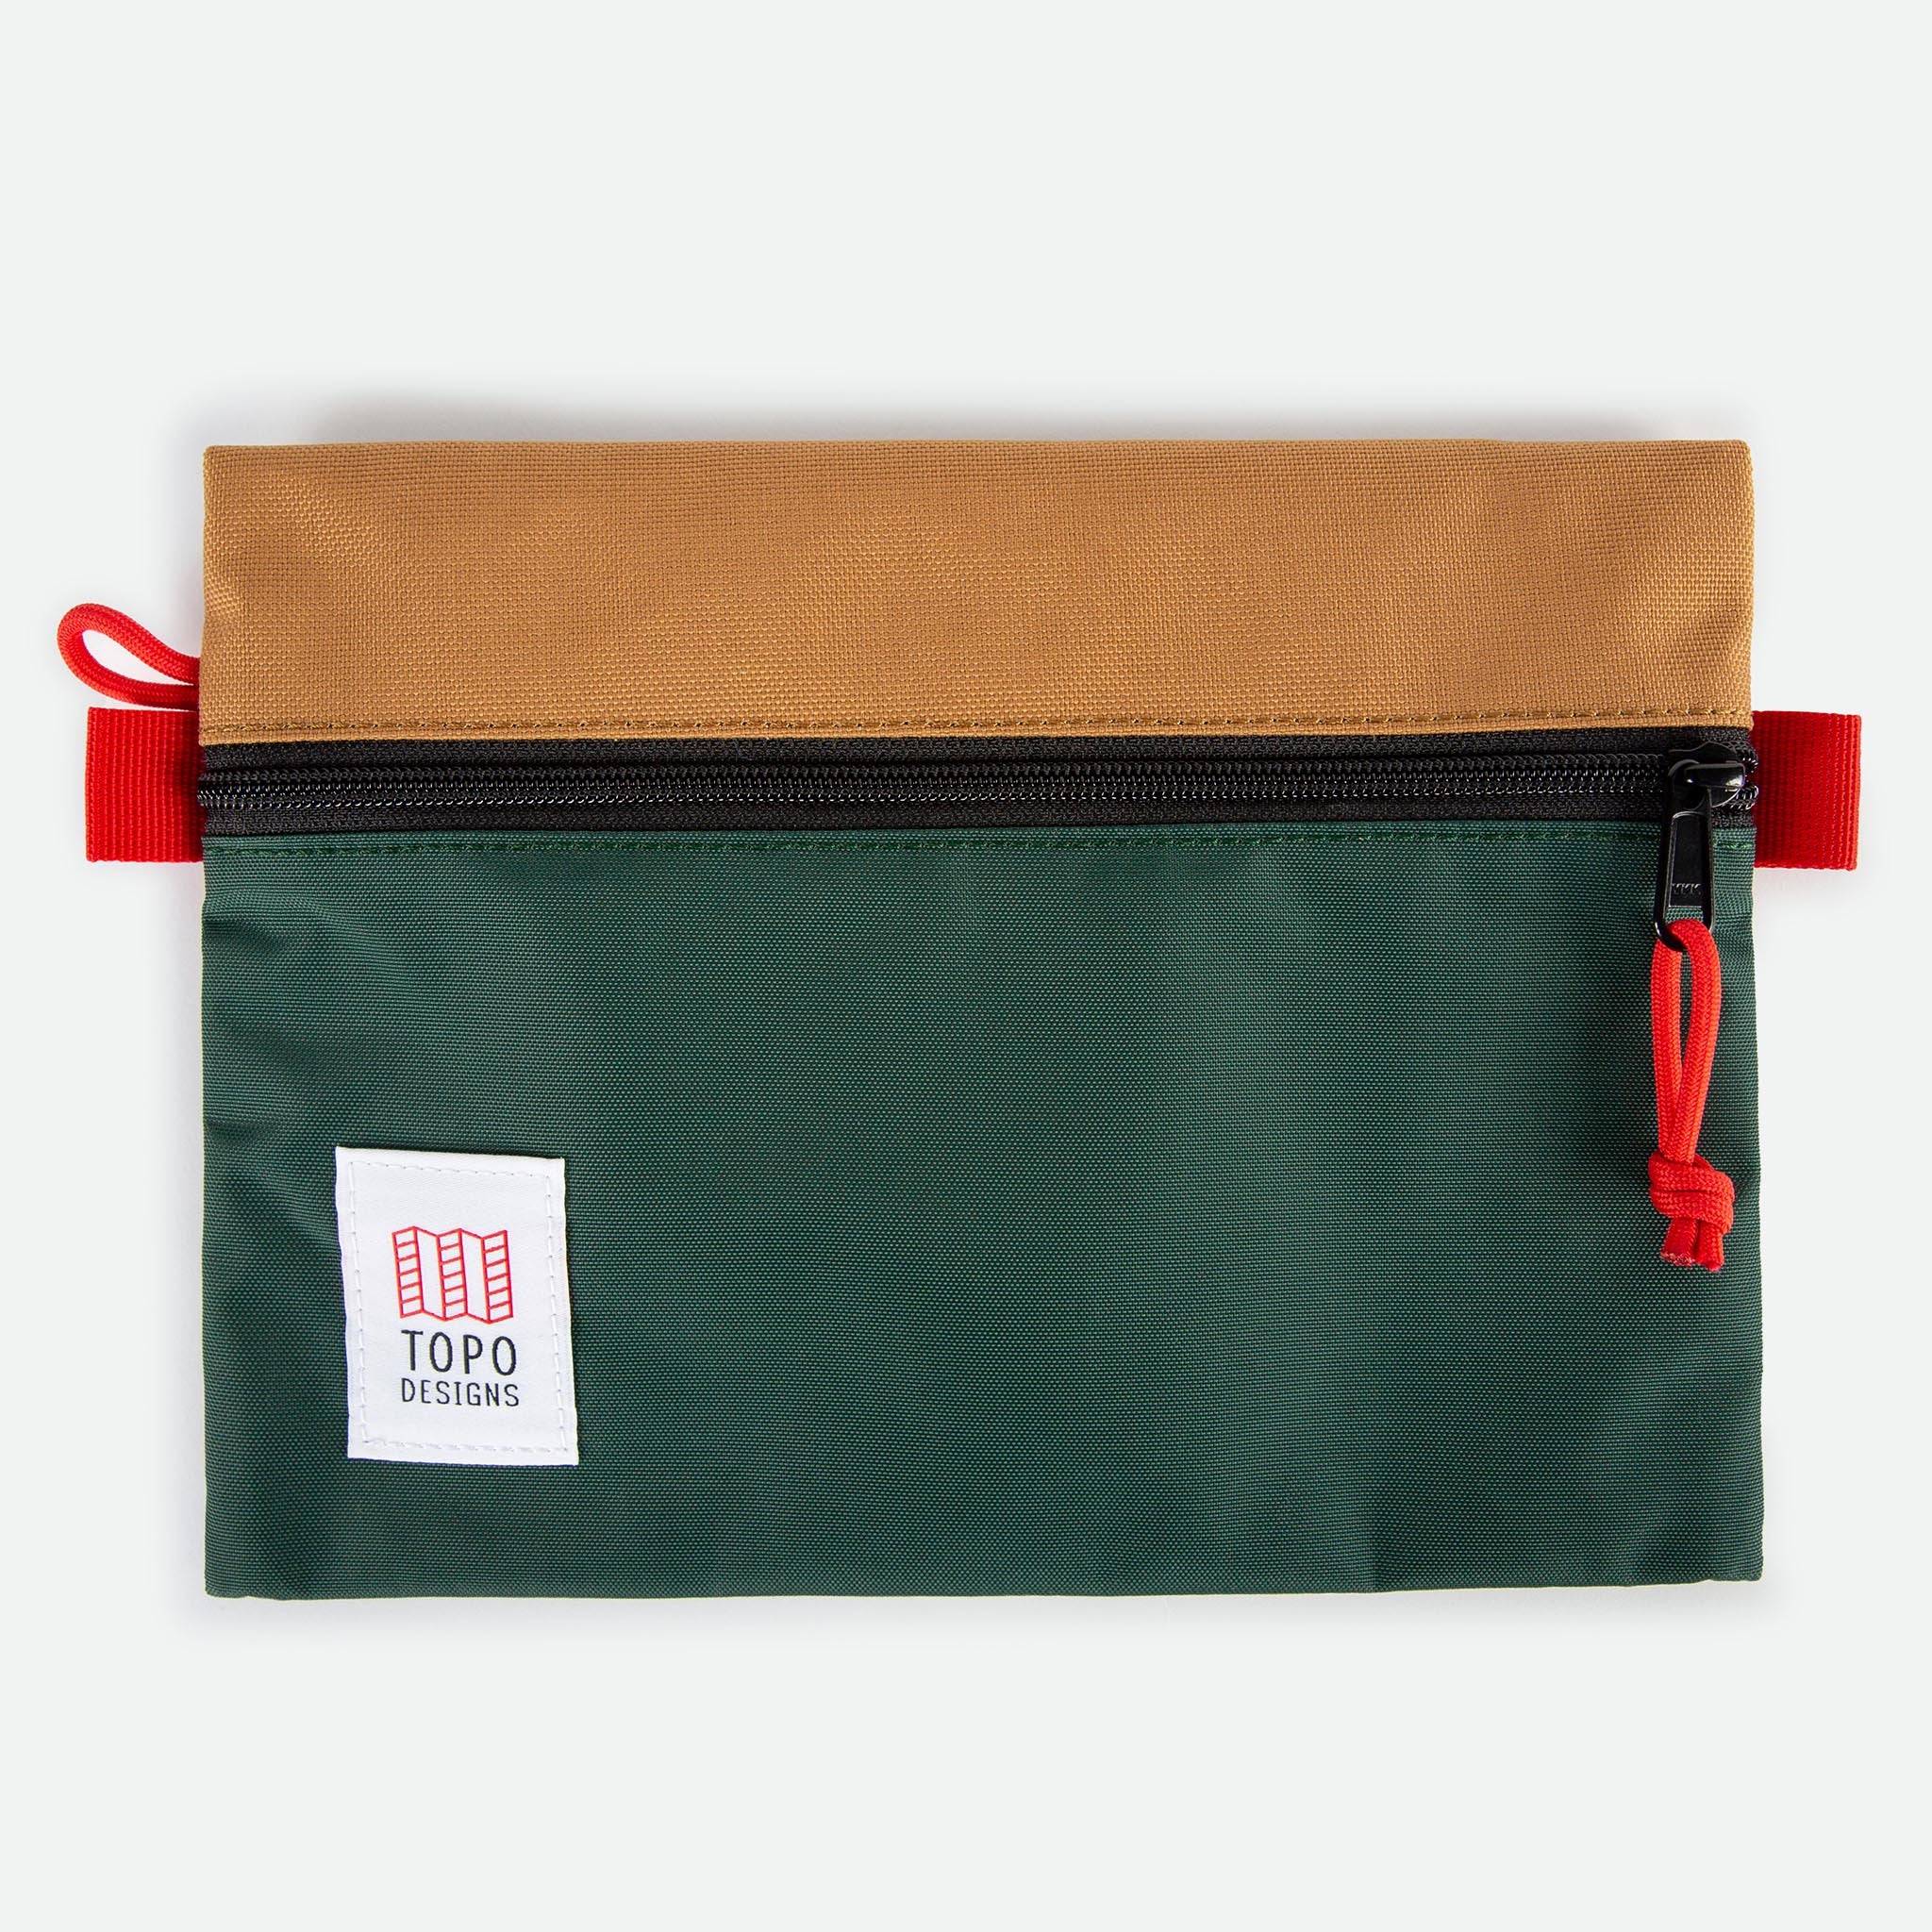 Topo Designs Accessory Bag Medium Forest/Khaki